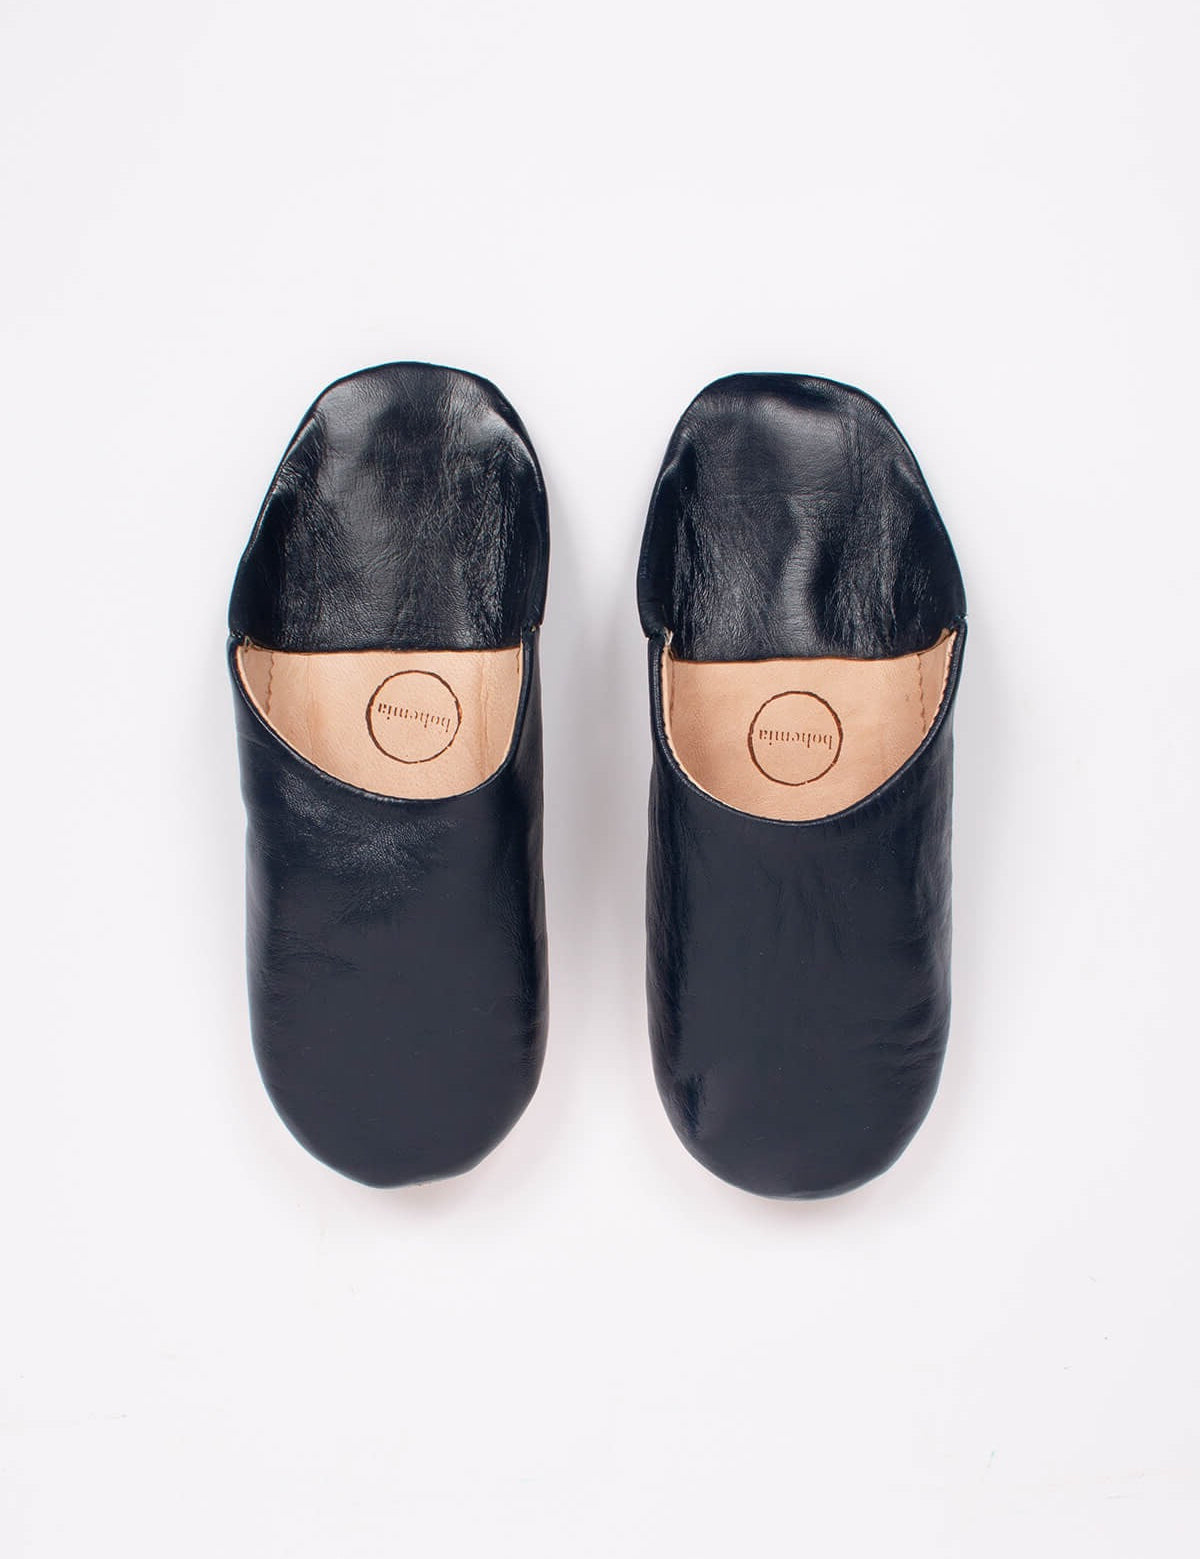 bohemia-design-moroccan-babouche-slippers-indigo_a1378b33-9d91-424f-9f90-b4ebd2b87373.jpg